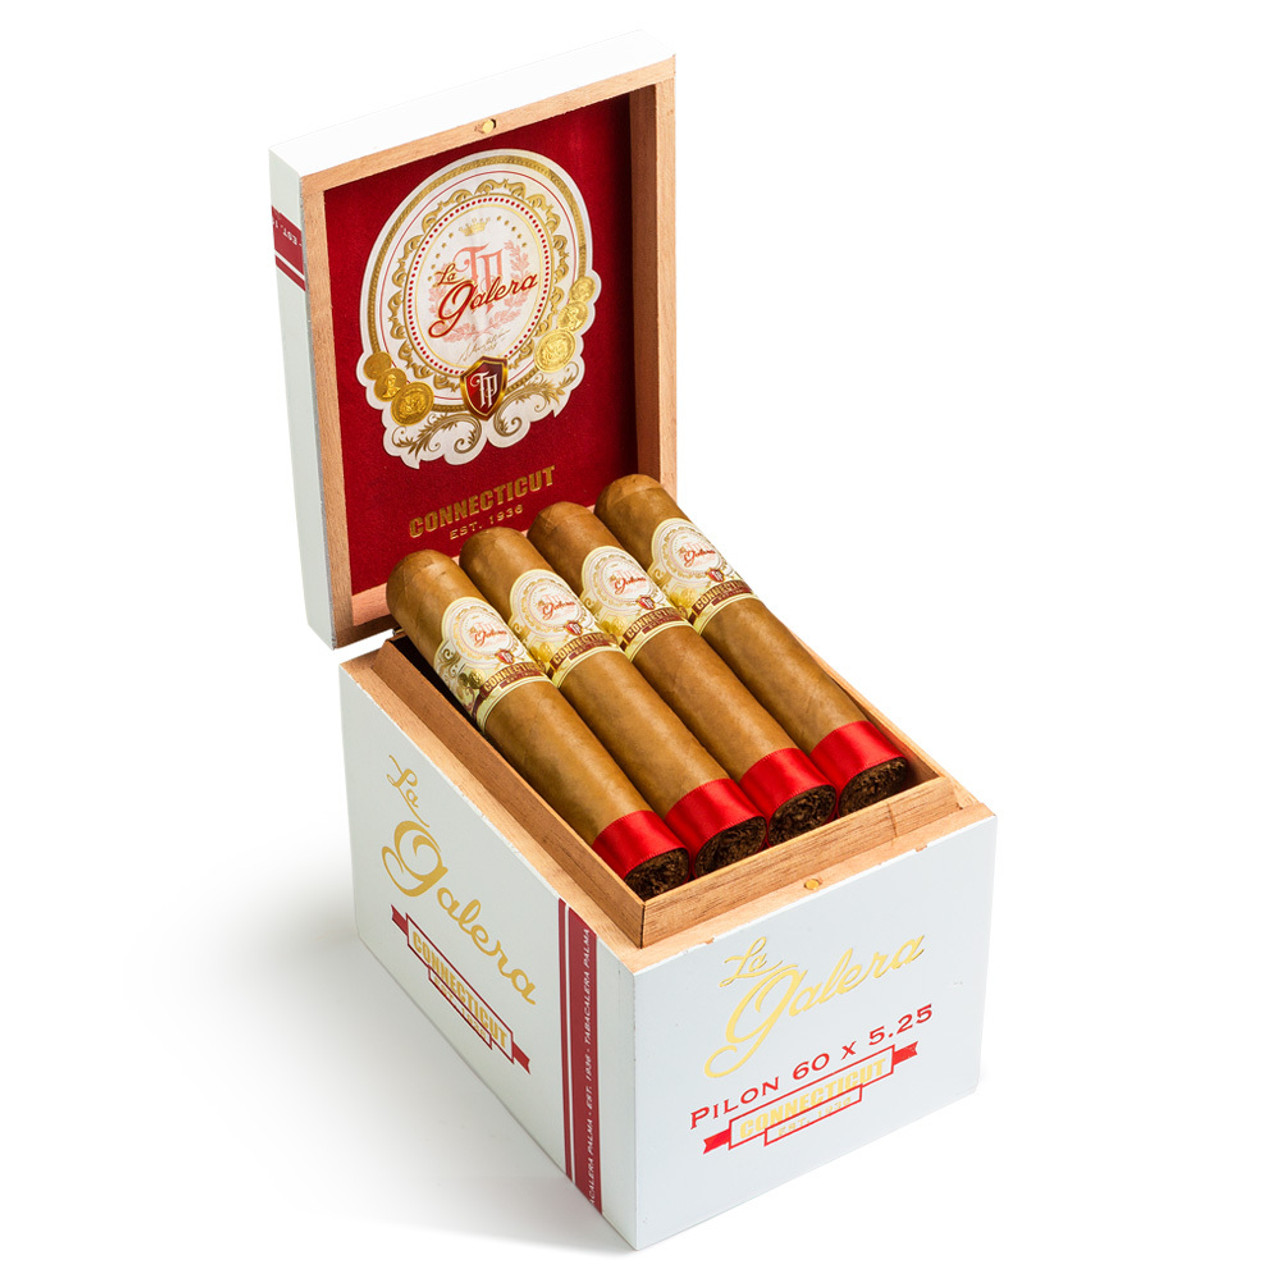 La Galera Connecticut Pilone Cigars - 5.25 x 60 (Box of 20) *Box